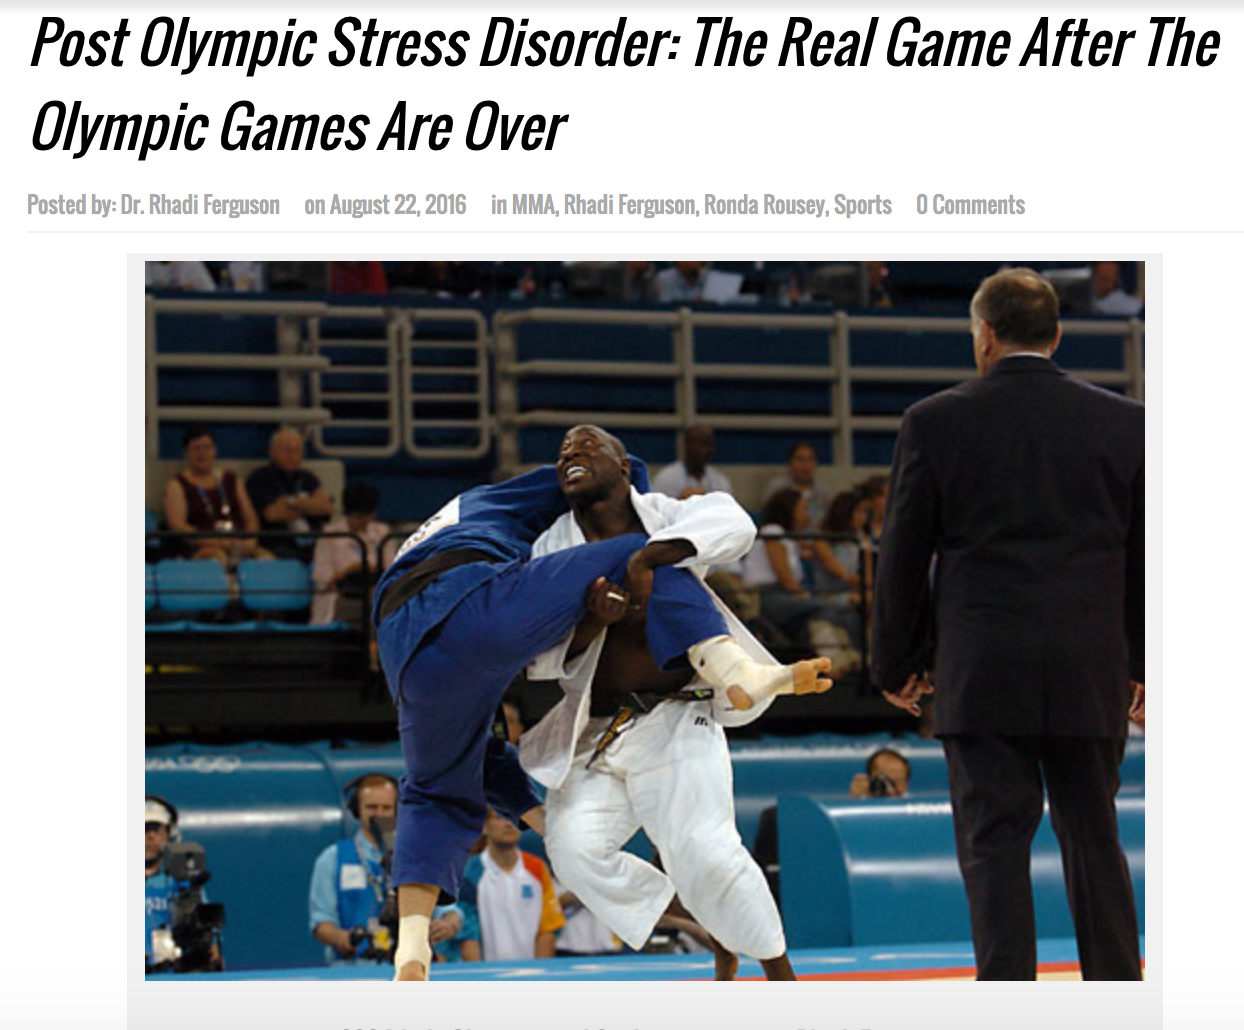 Dr. Rhadi Ferguson explains Post Olympic Stress Disorder